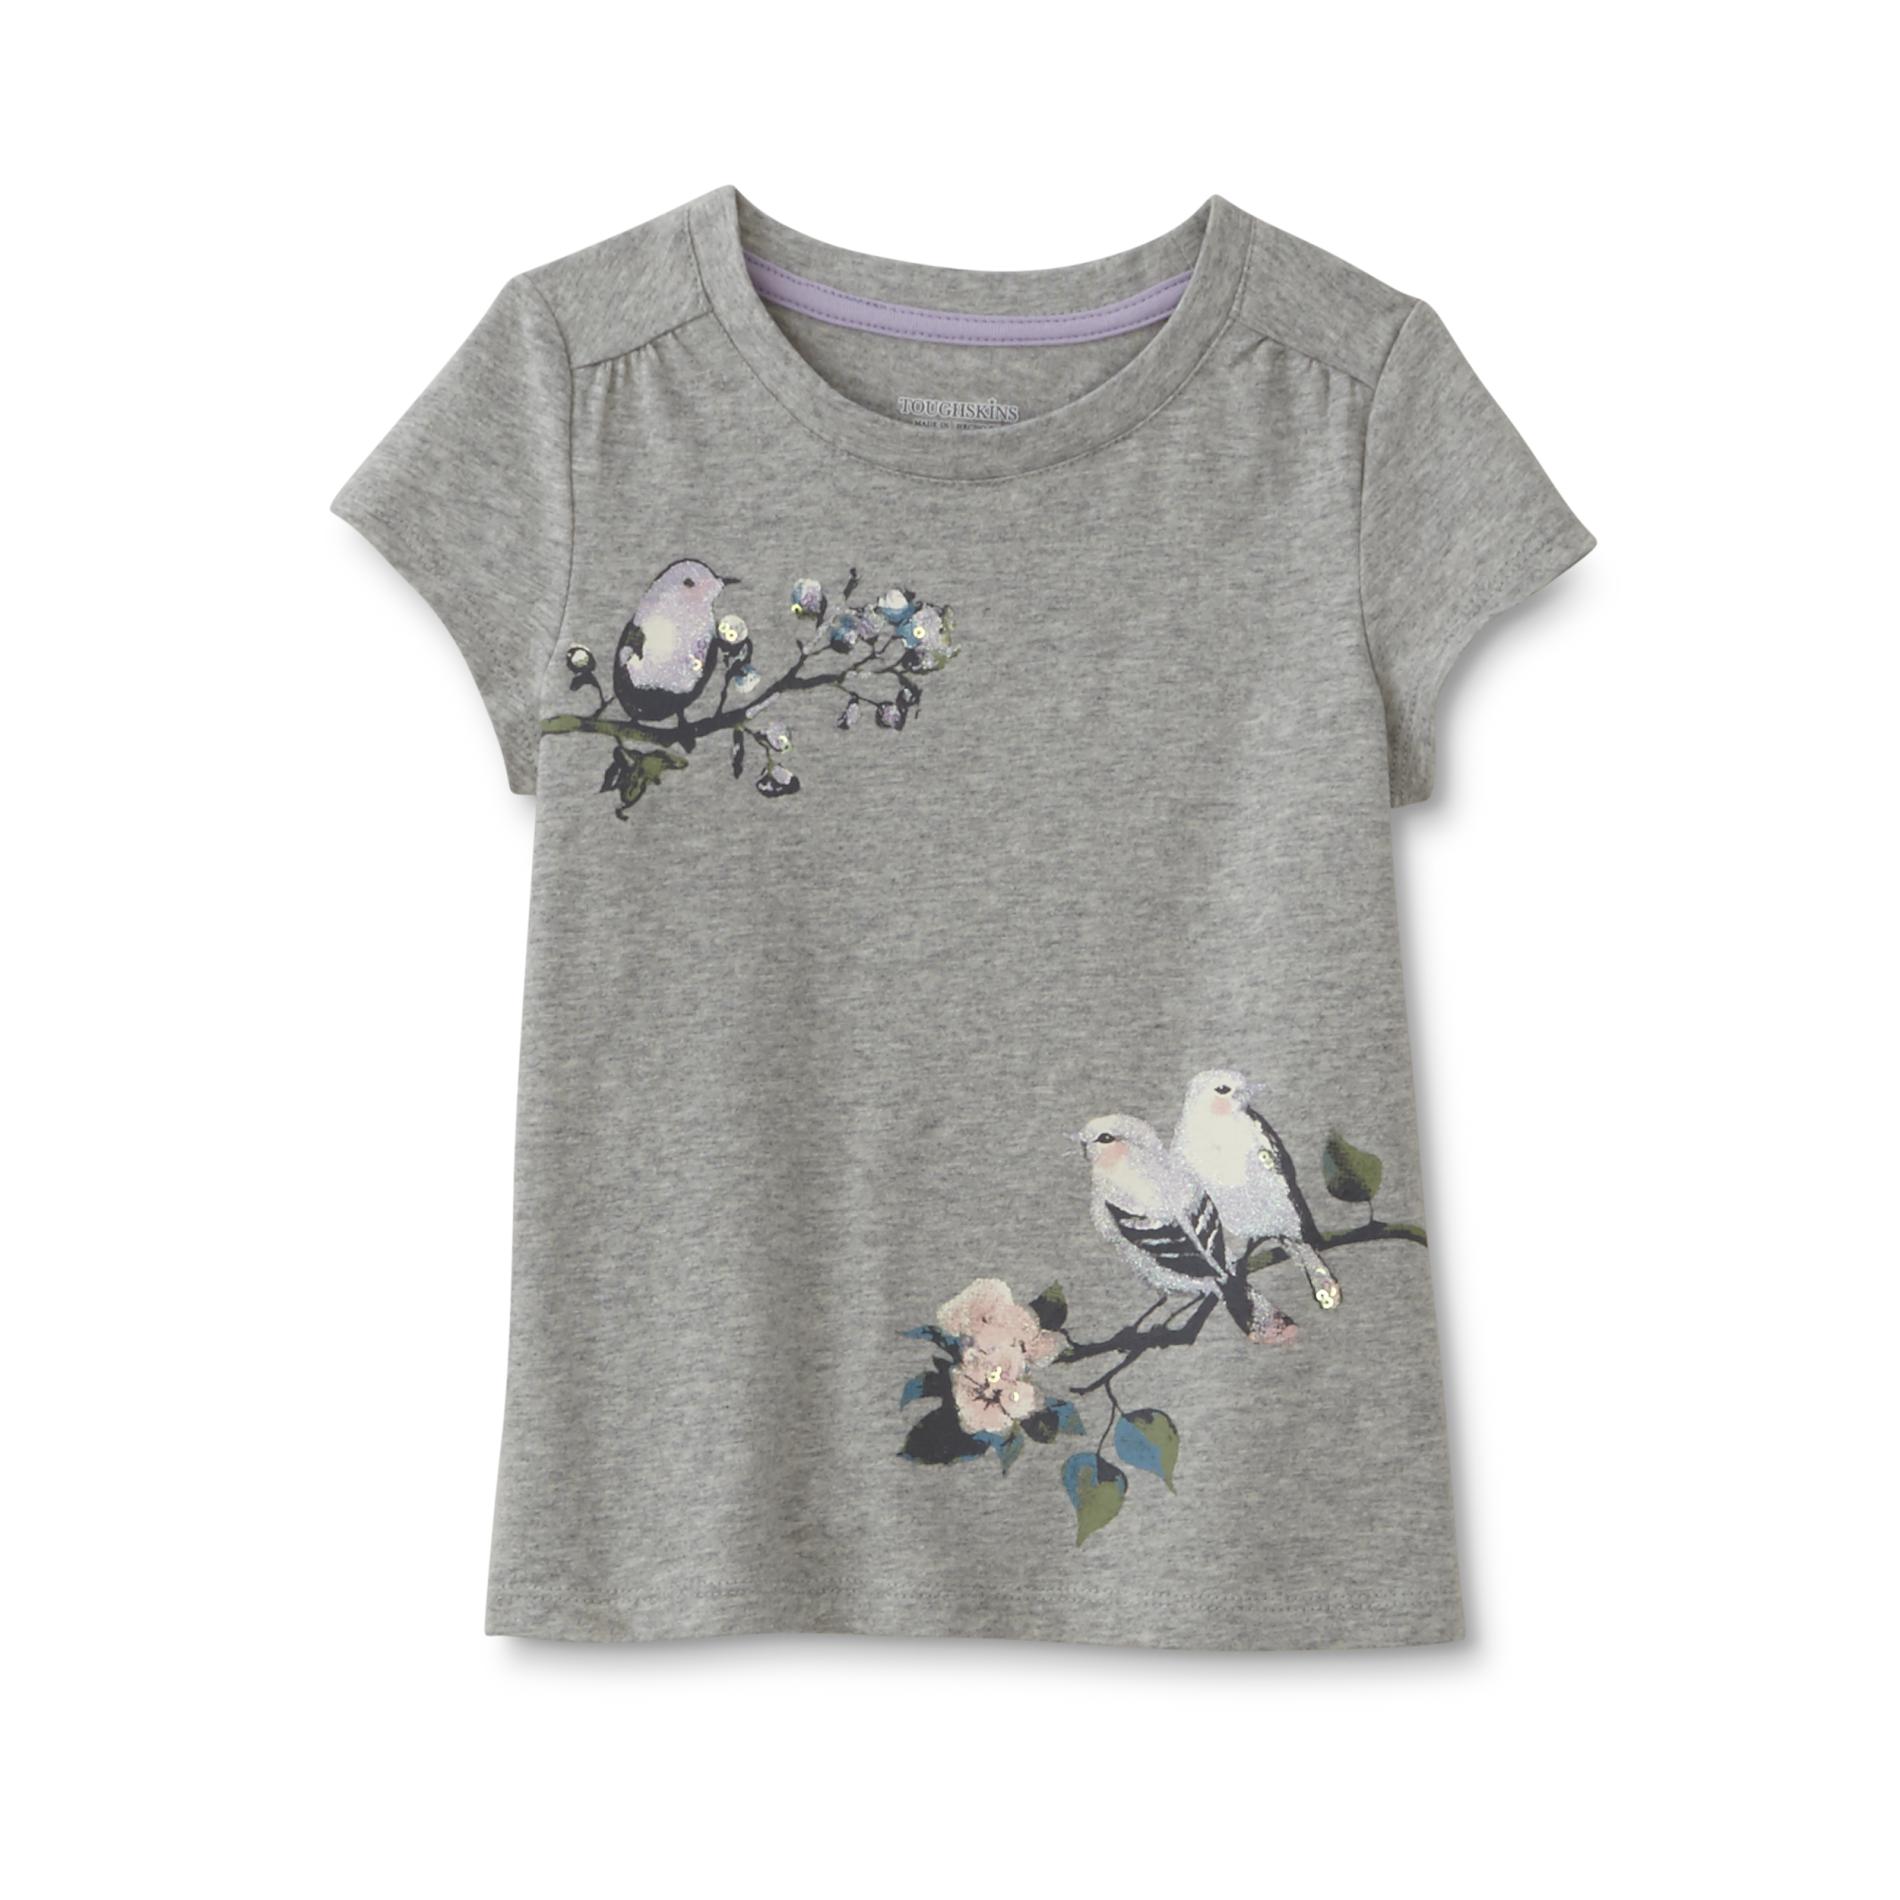 Toughskins Infant & Toddler Girl's Graphic T-Shirt - Birds